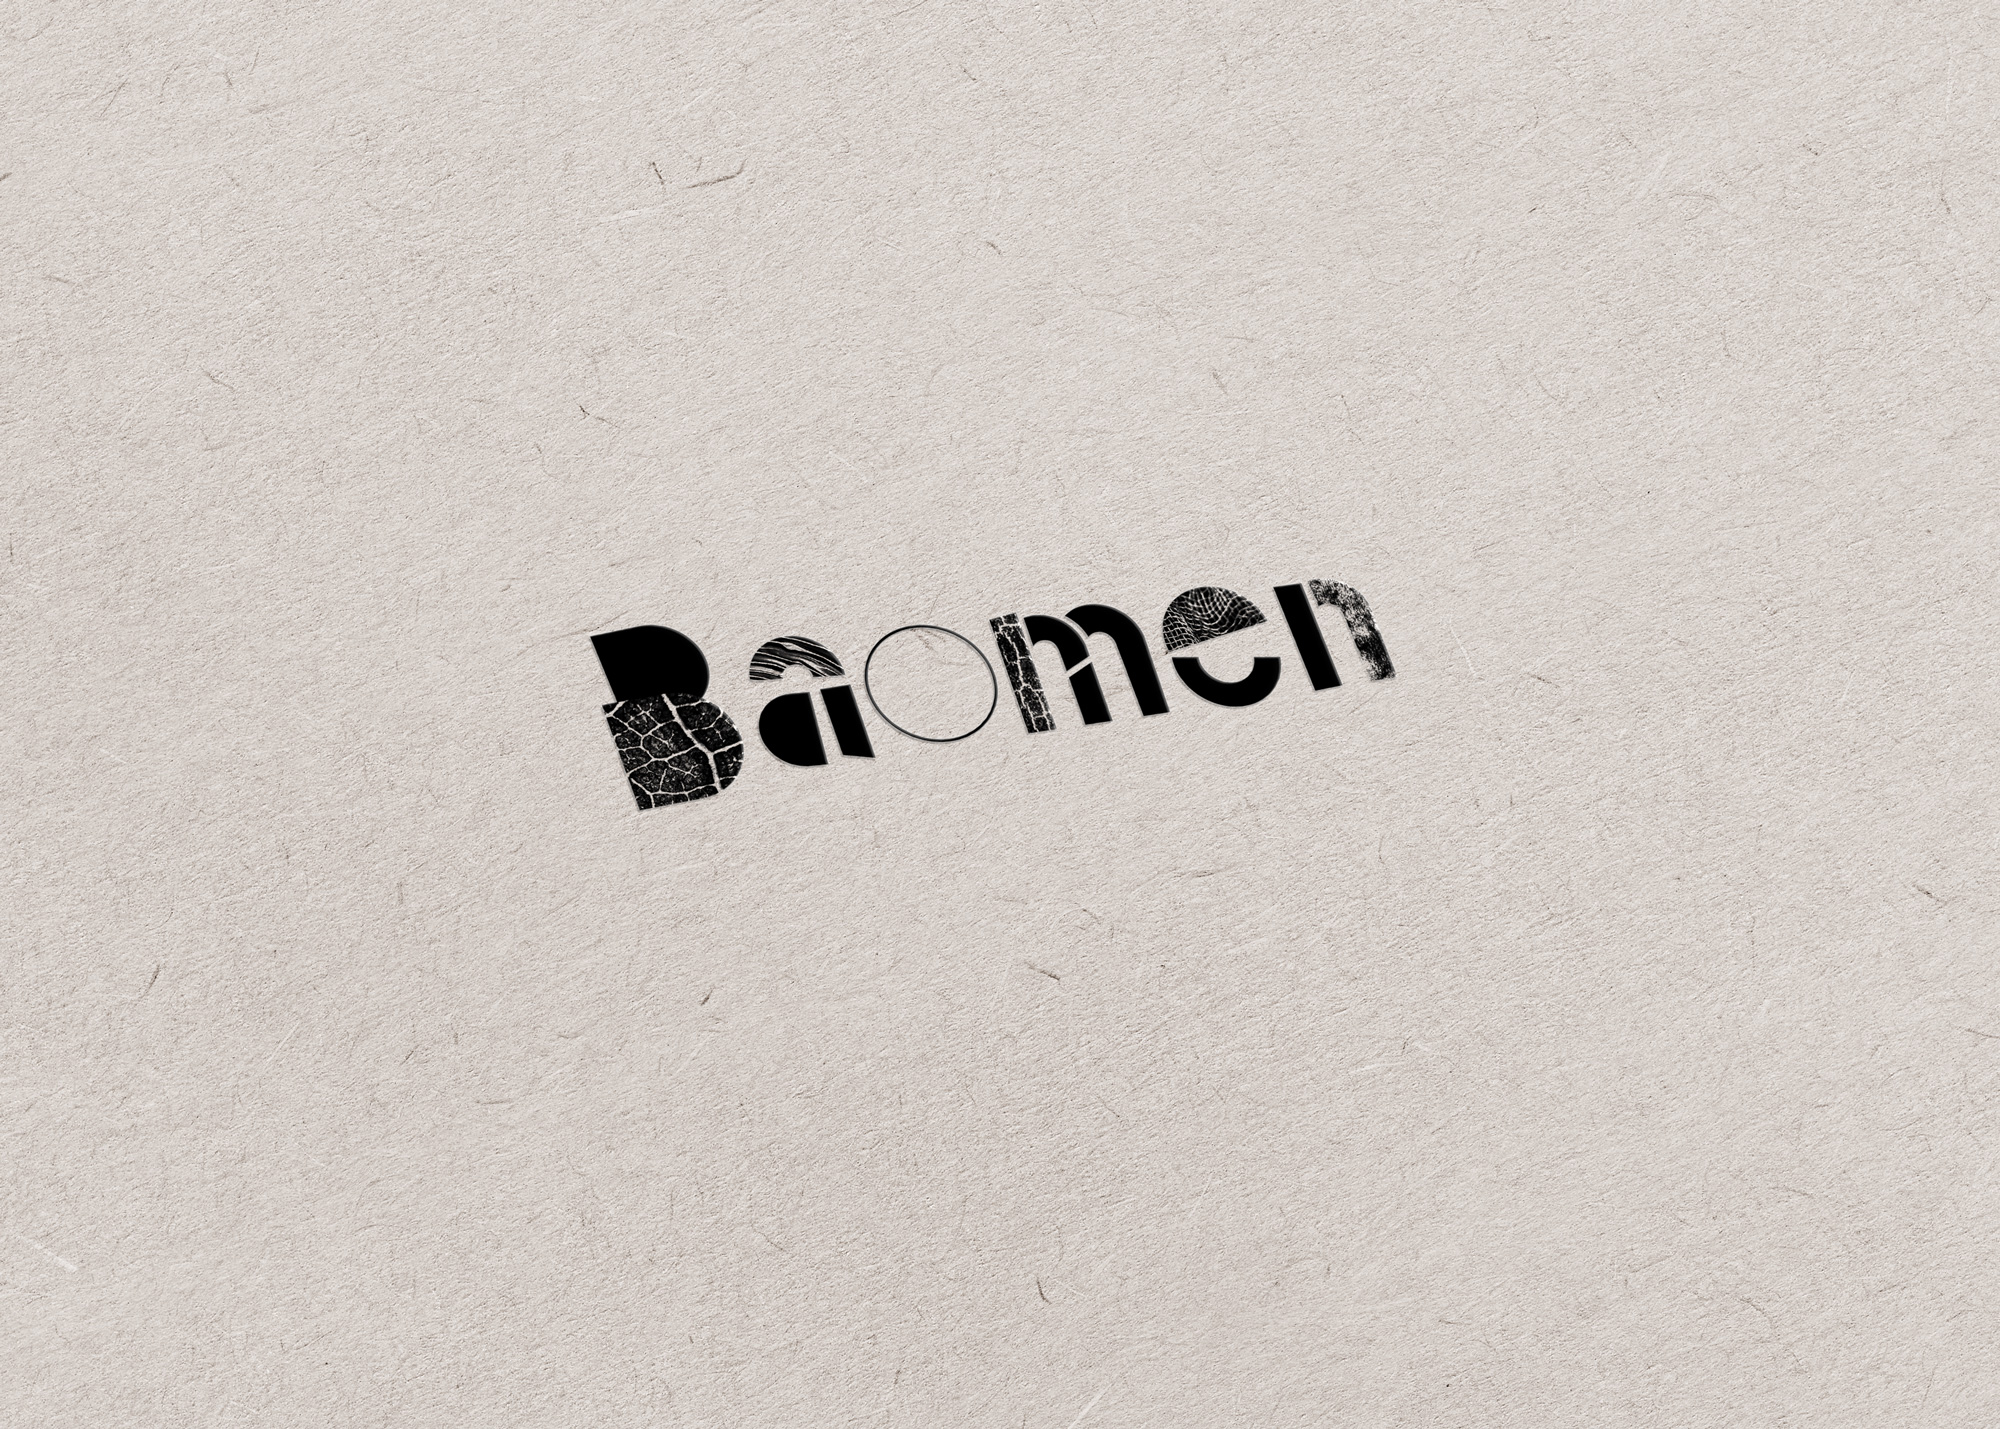 Baomen-logo-Clémentine-Mouret